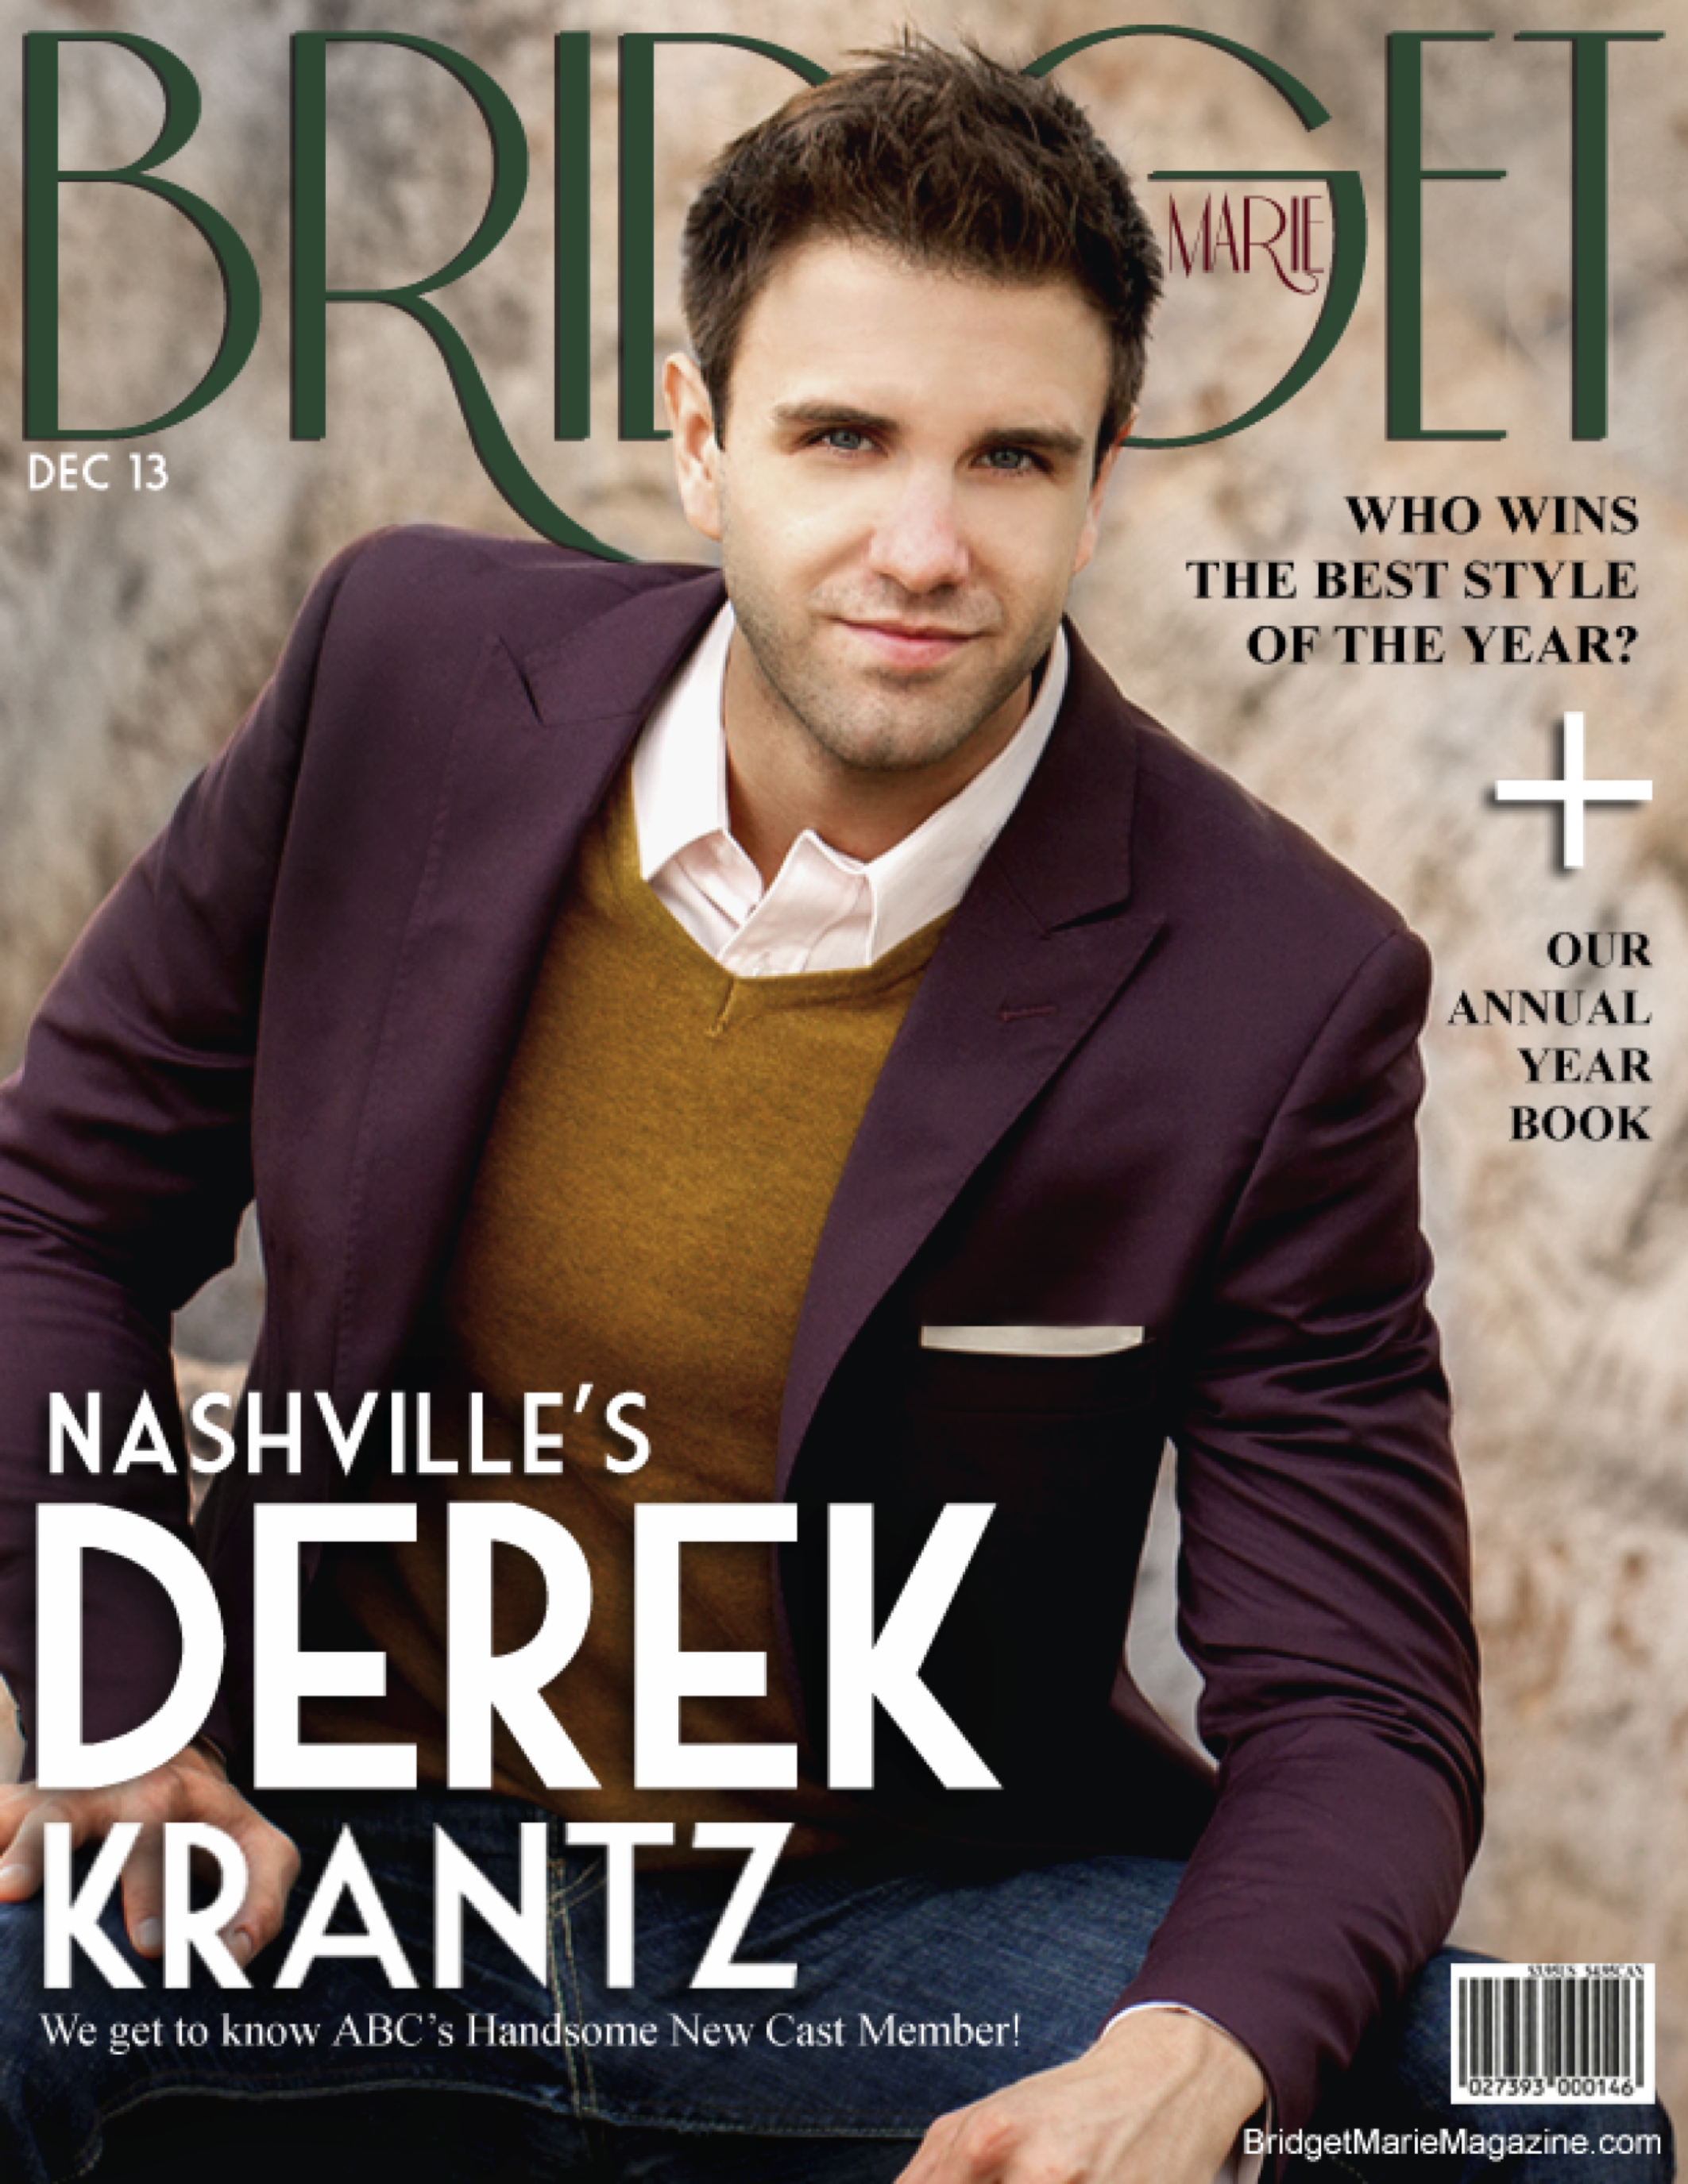 Bridget Marie Magazine Cover. December 2013. Nashville's Derek Krantz